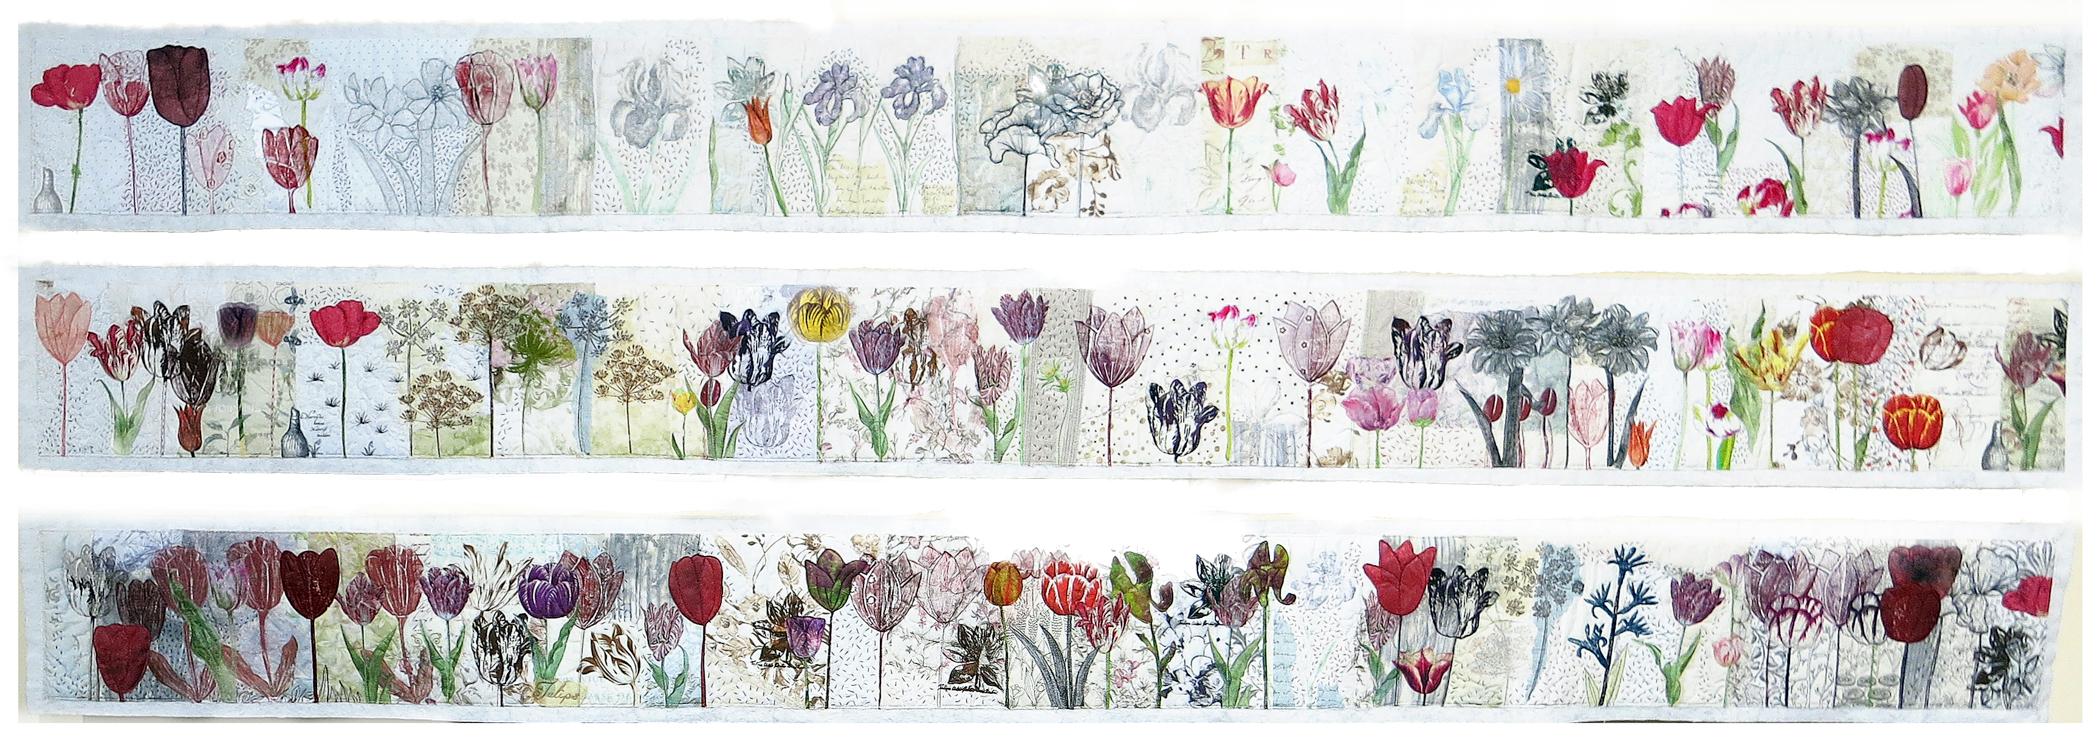 Elsbeth Nusser-Lampe (Germany) - Frieze of Tulips - 3 panels